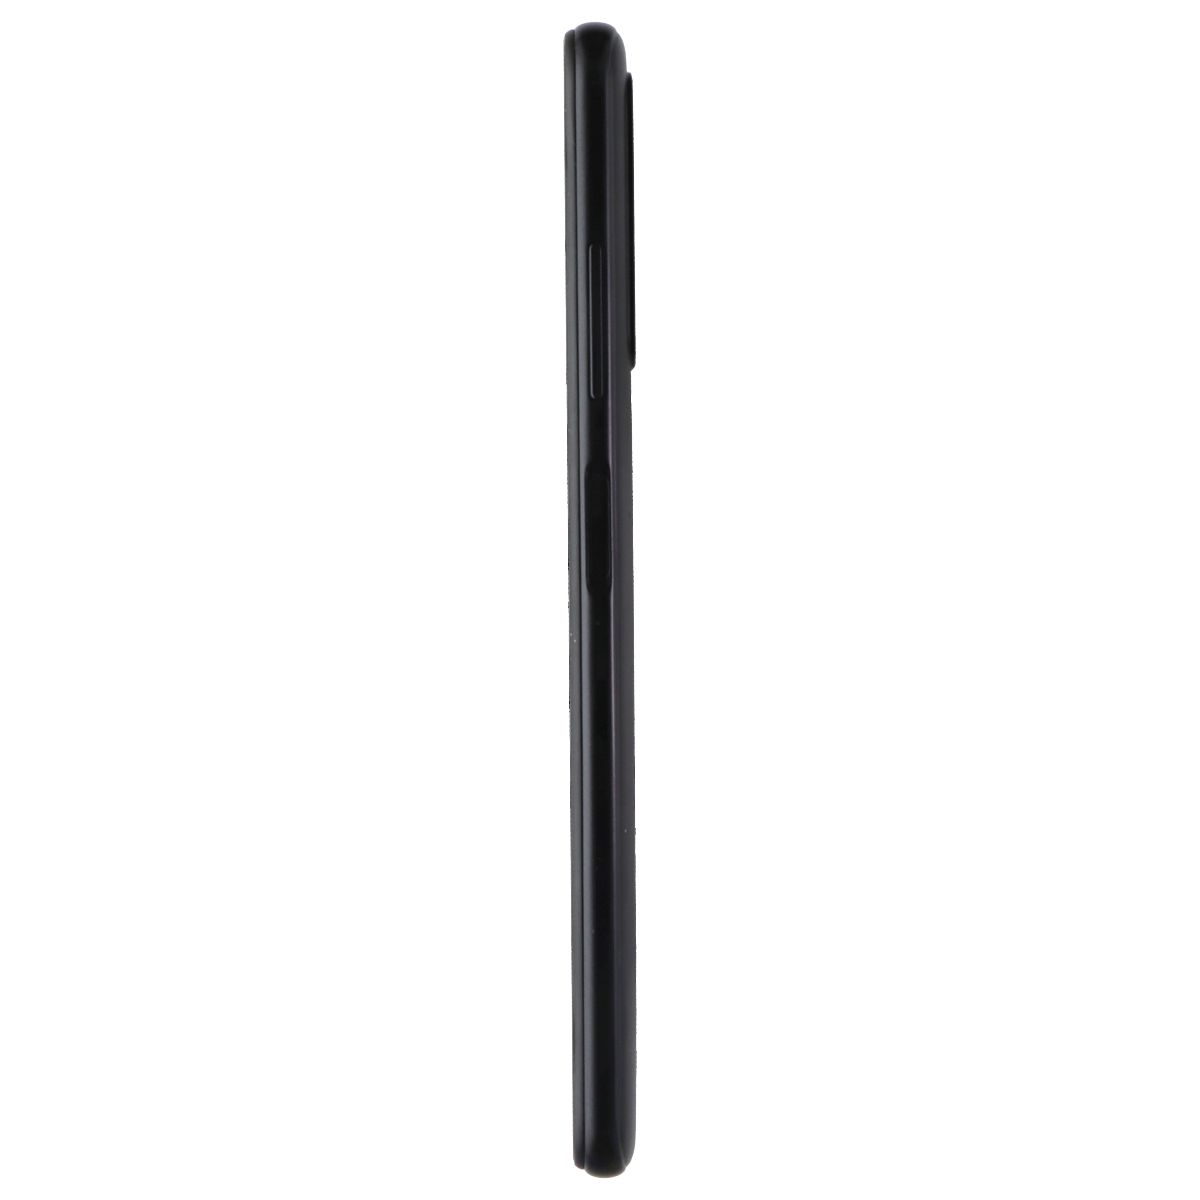 Samsung Galaxy A03s (6.5-in) Smartphone (SM-A037U) Verizon - 32GB/Black